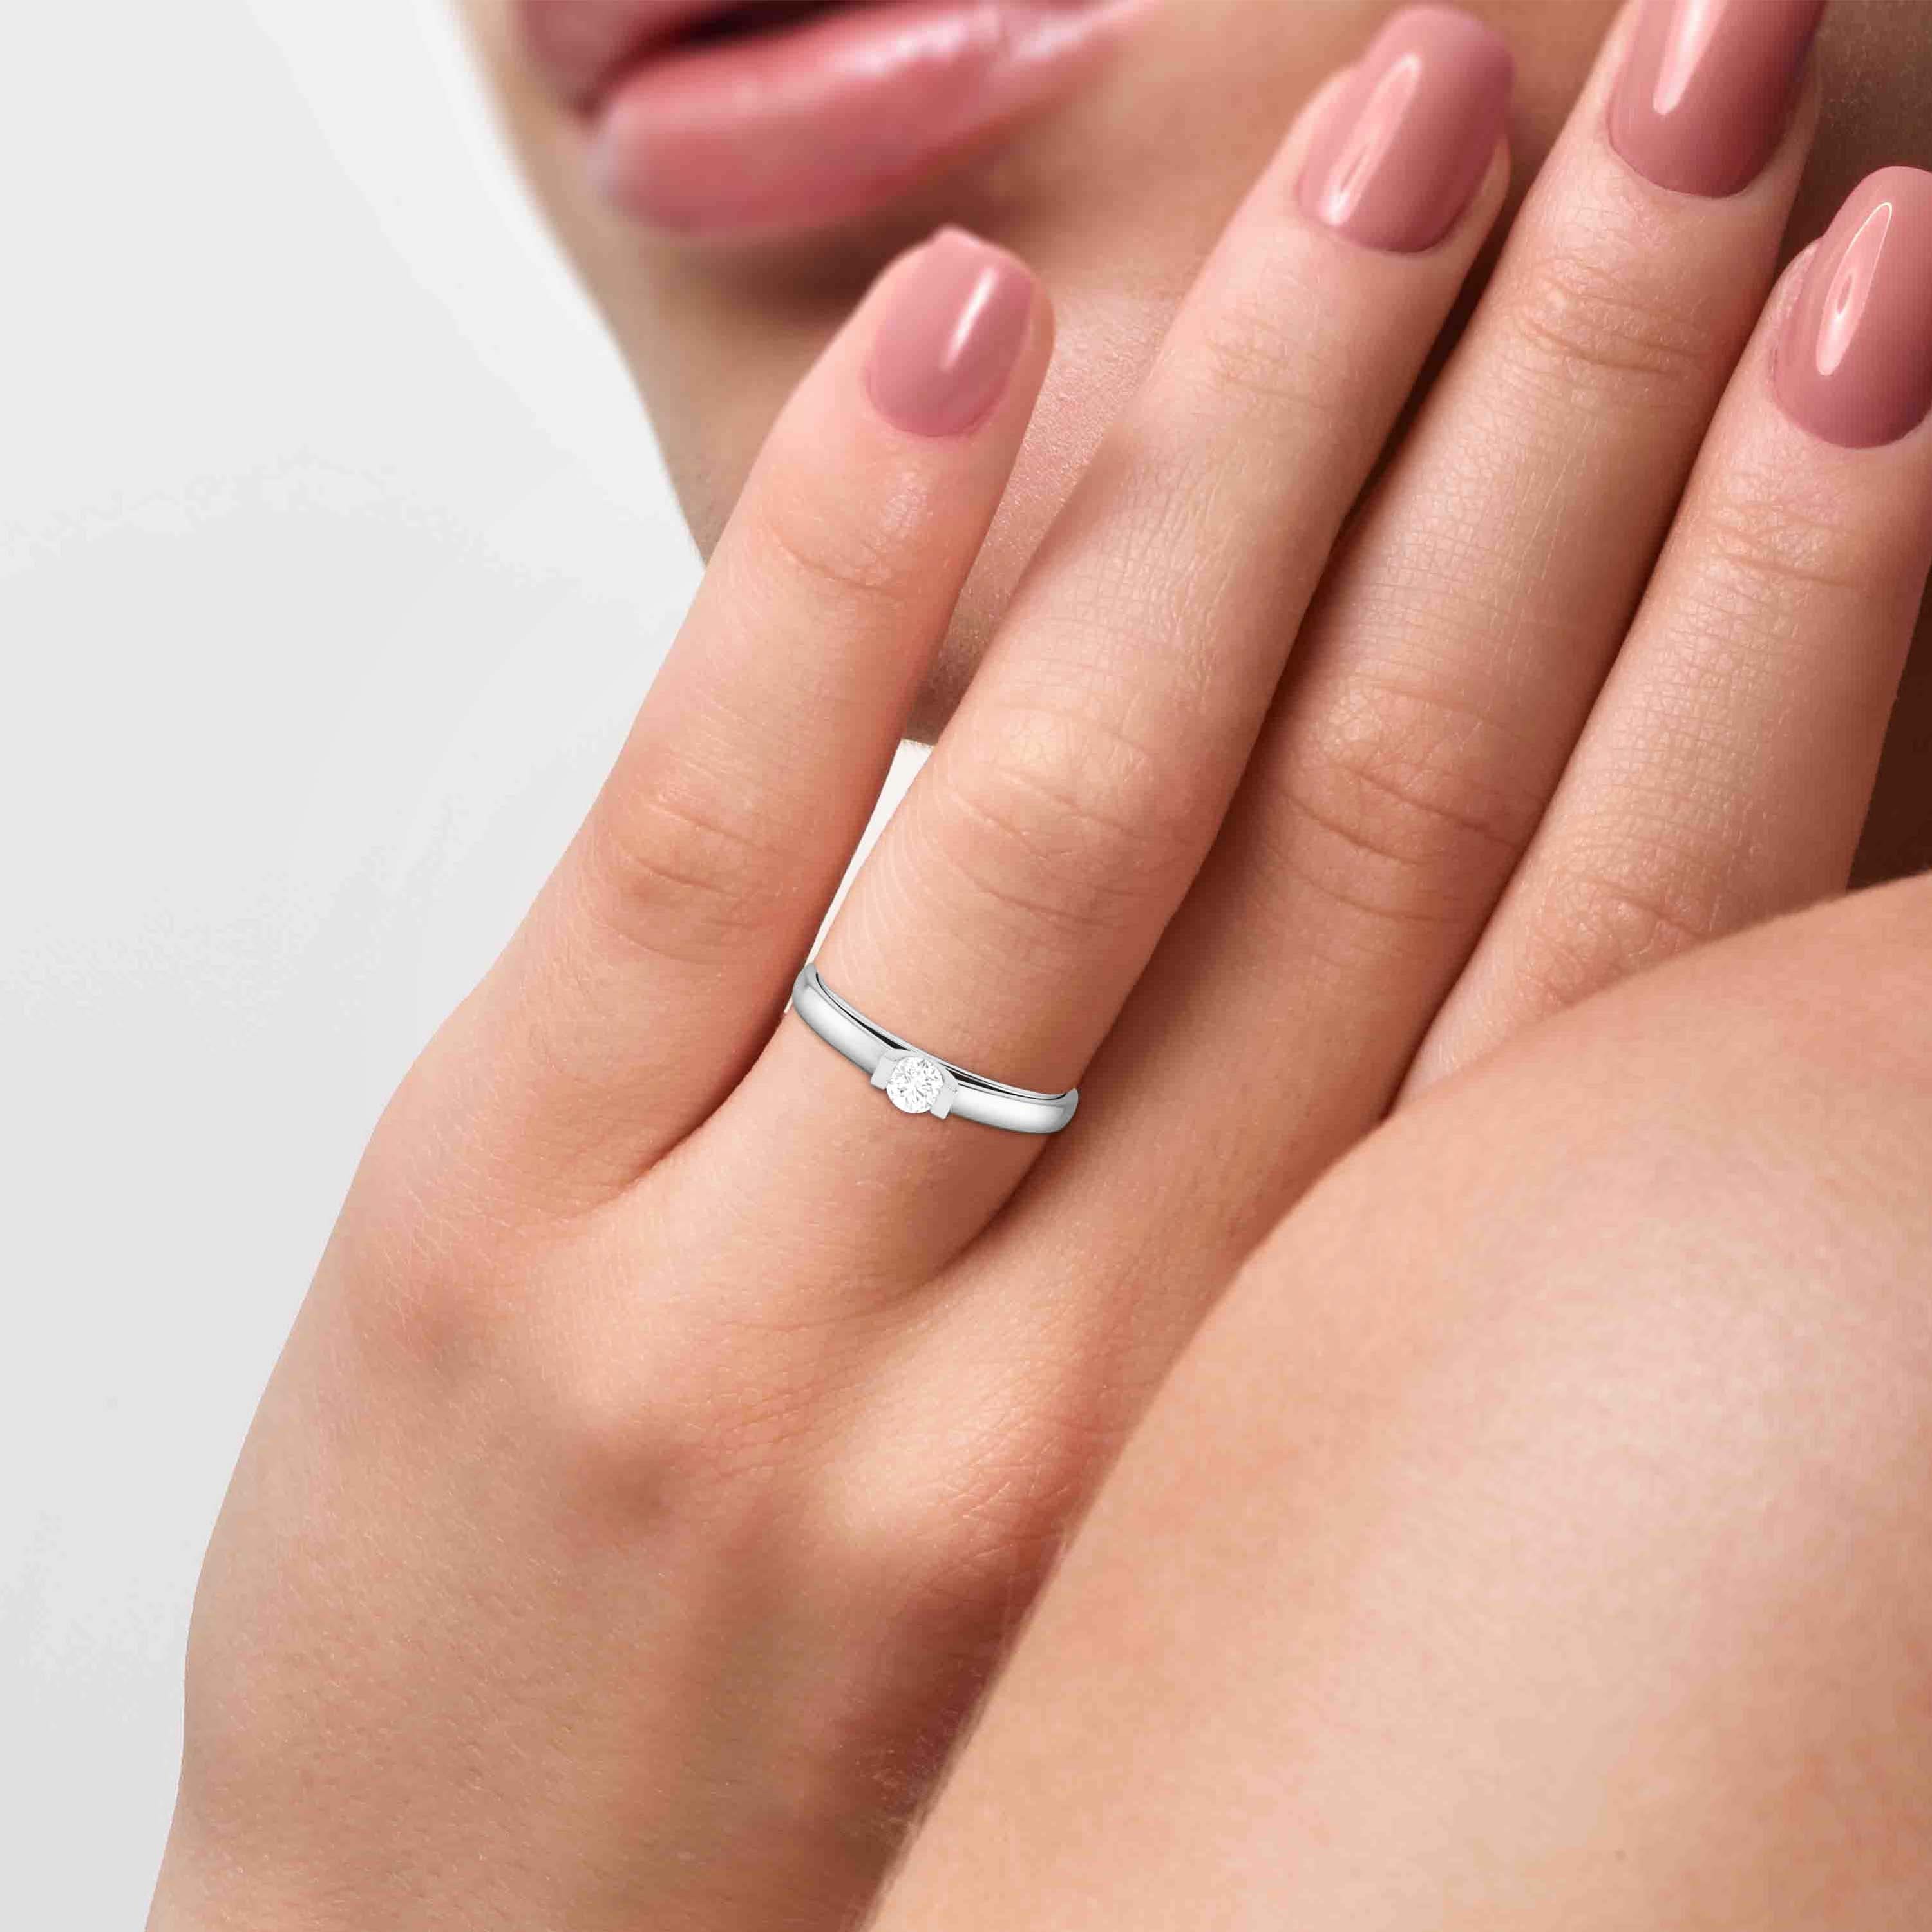 Natural Diamond Ring For Women - Diamond Rings Latest Designs